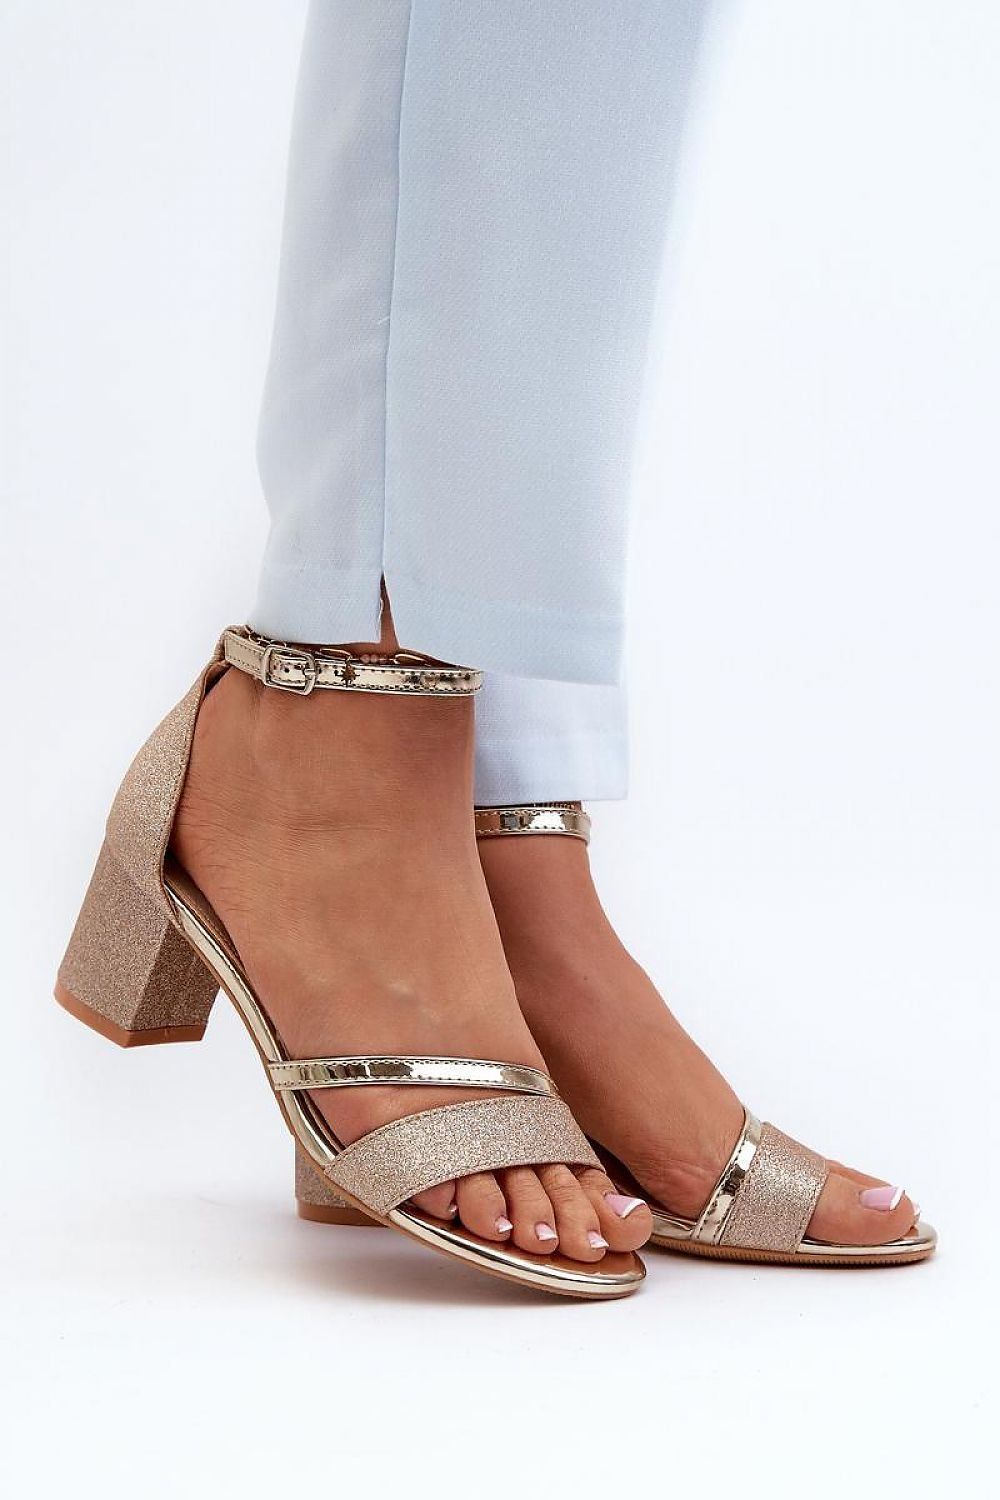 Heel sandals model Step in style - Yara fashion